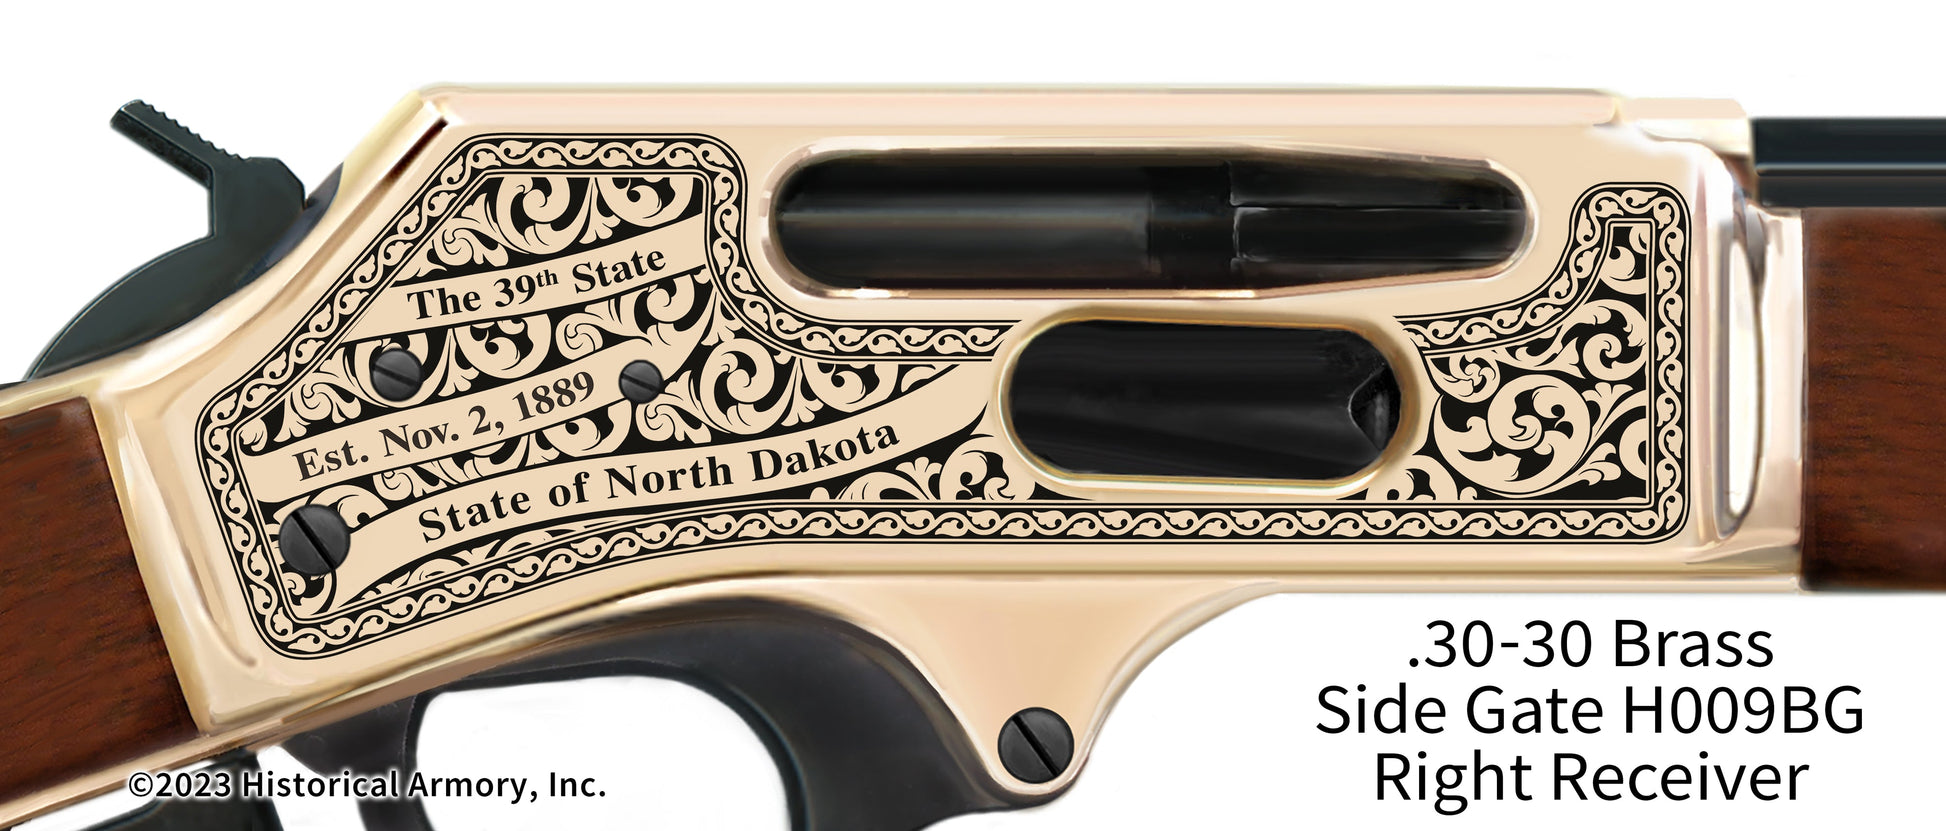 Mercer County North Dakota Engraved Henry .30-30 Brass Side Gate Rifle